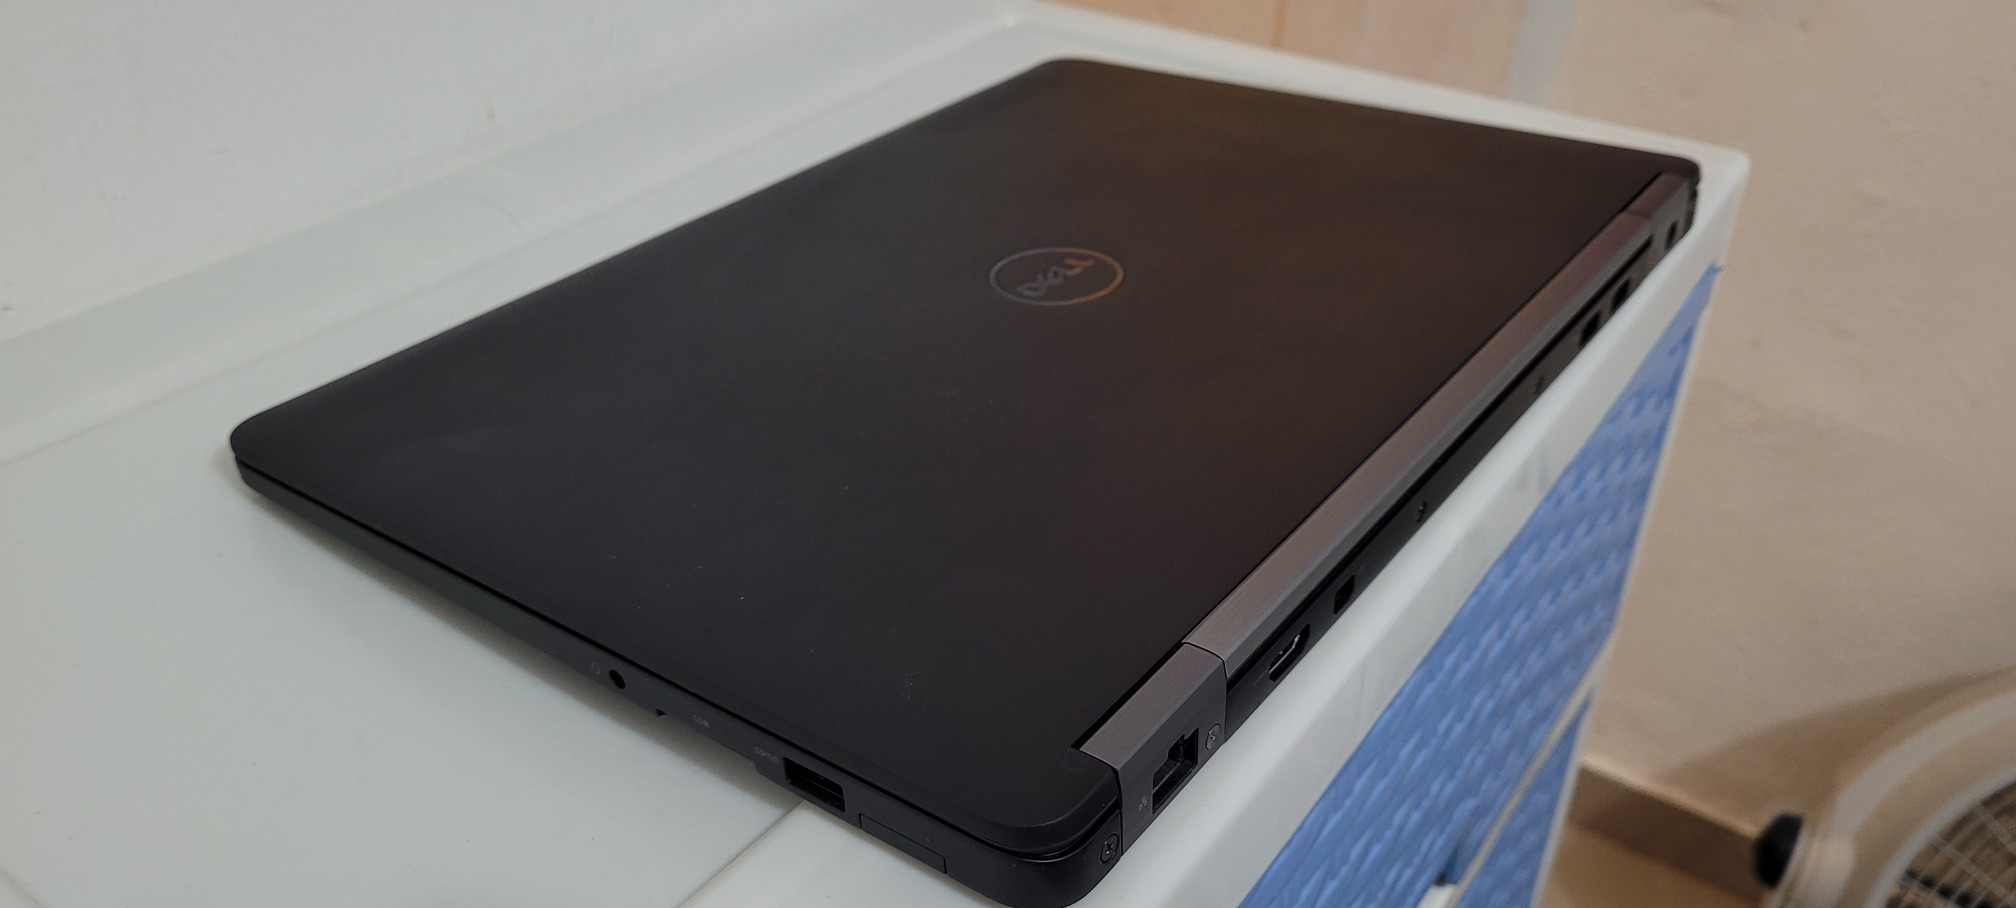 computadoras y laptops - Dell 7480 14 Pulg Core i5 7ma Ram 8gb Disco 128gb SSD 1080p 2